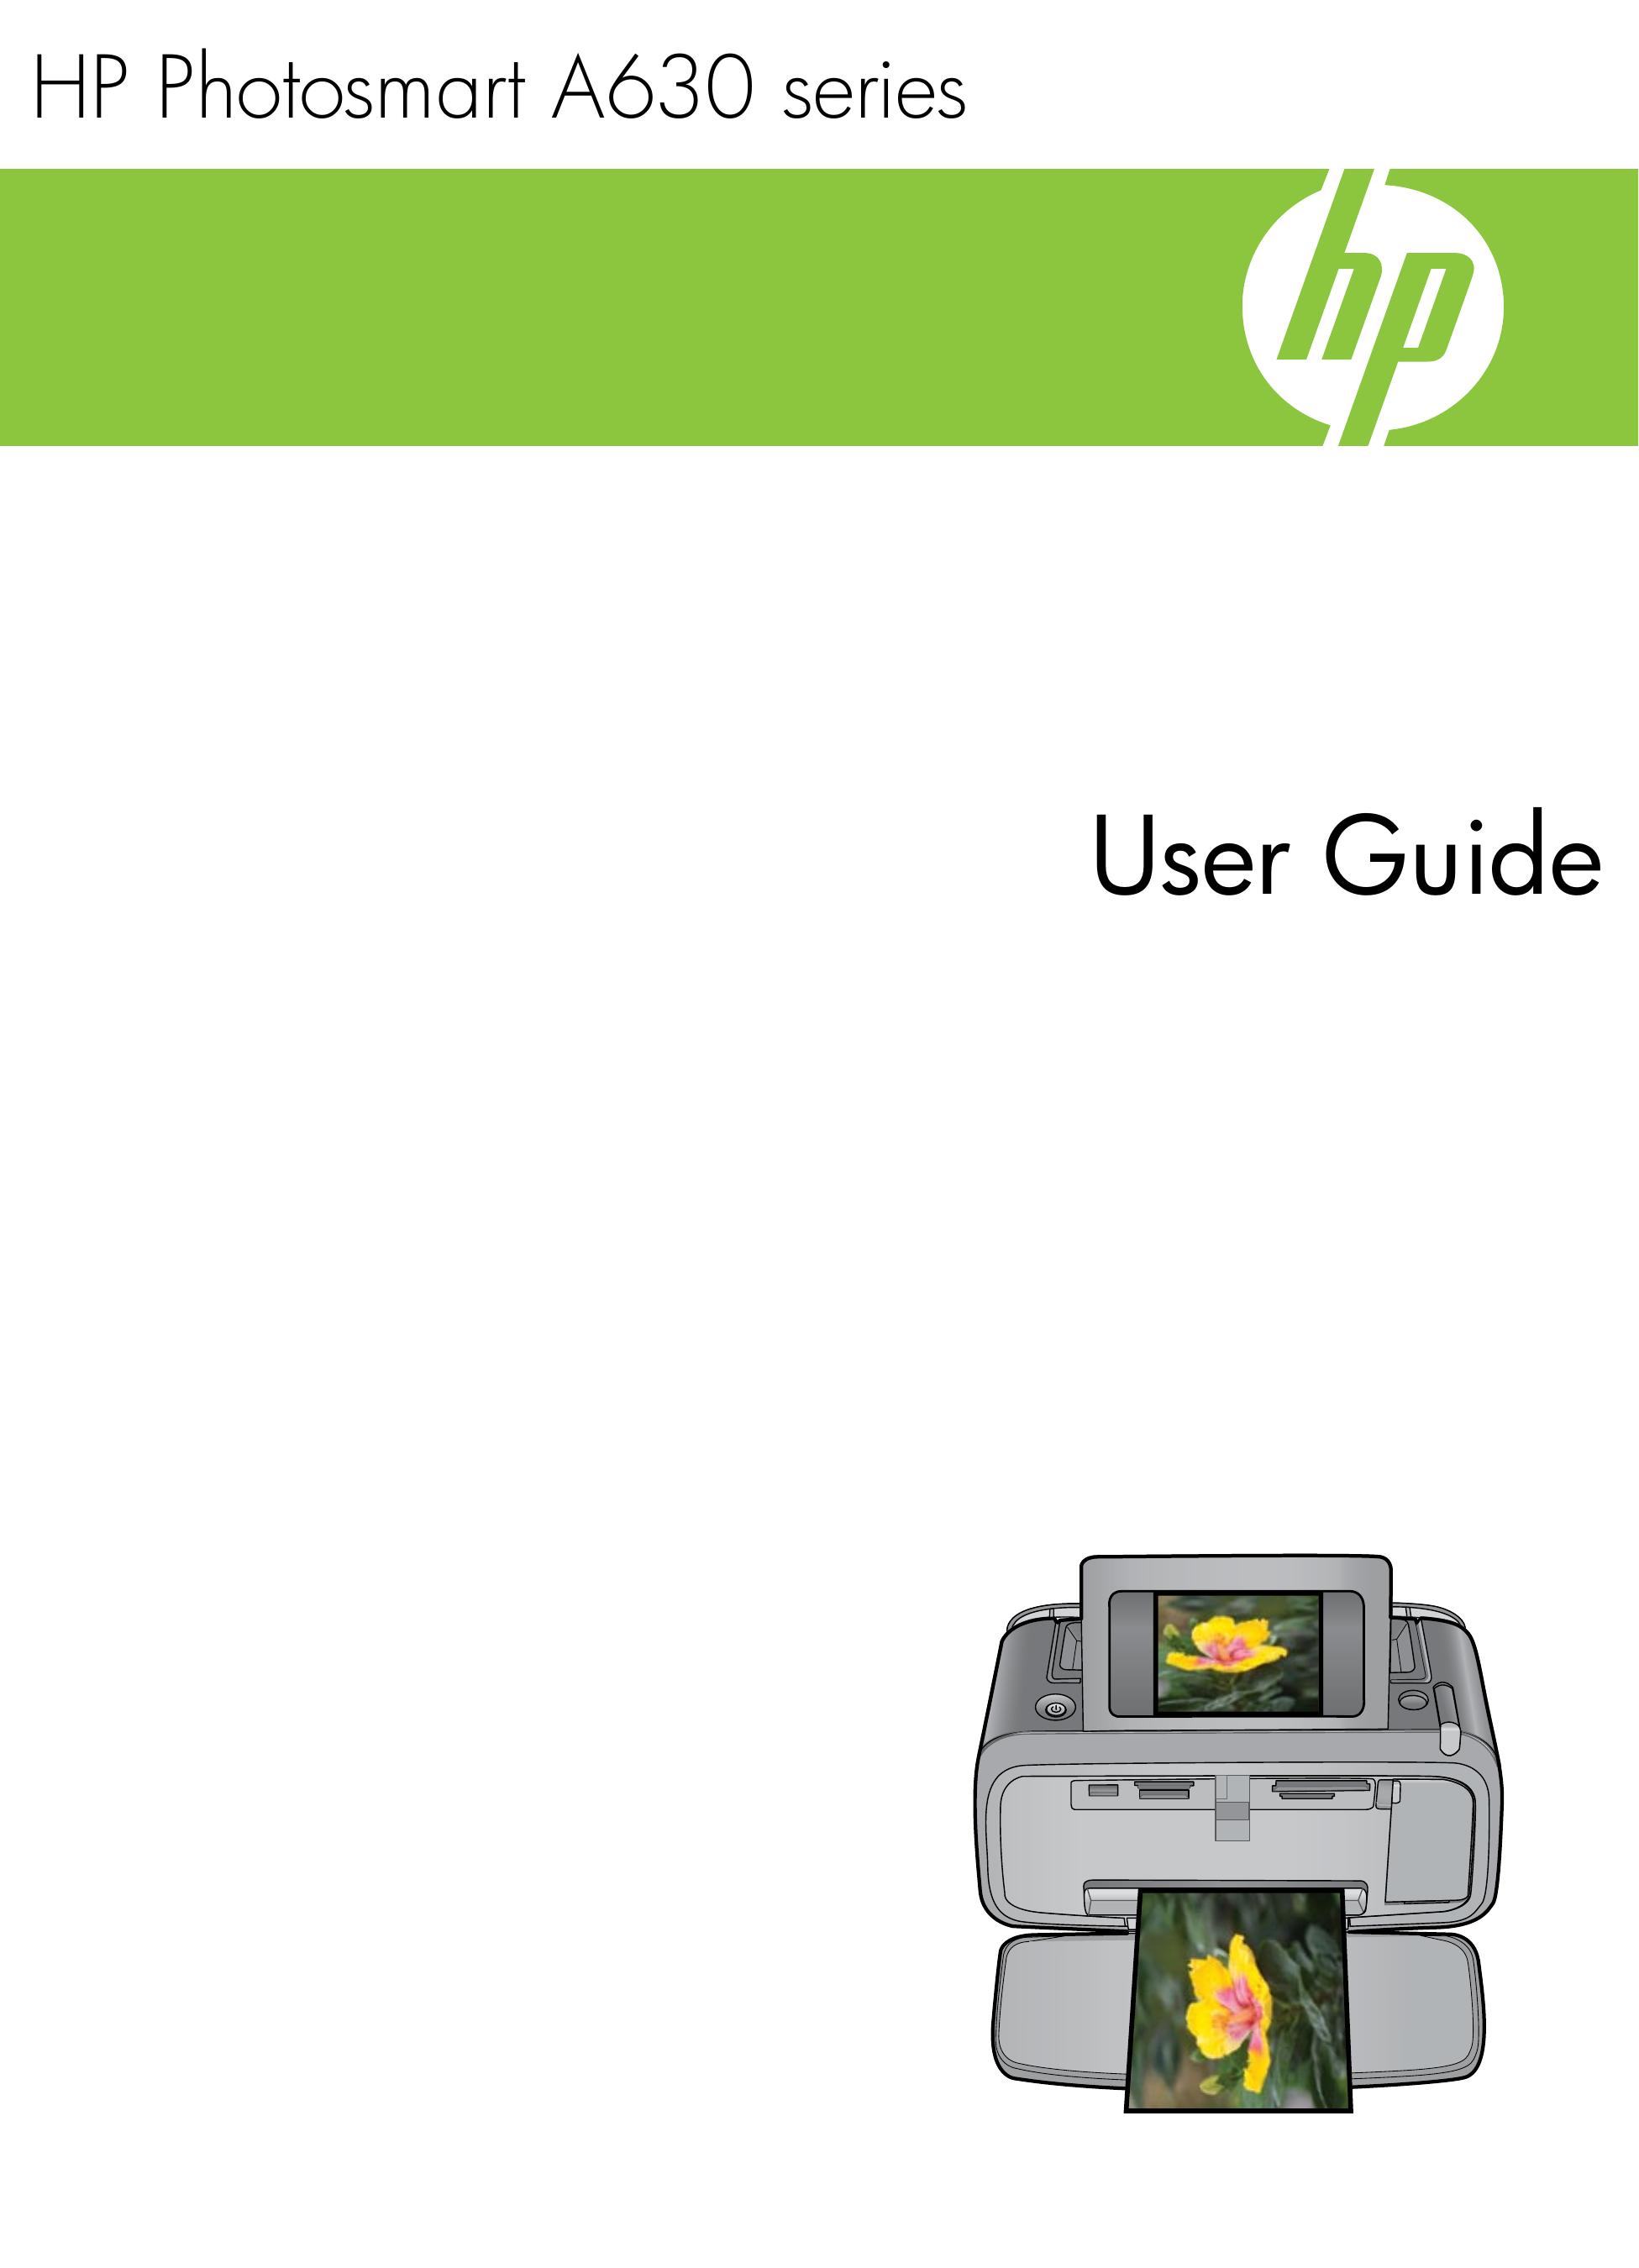 HP (Hewlett-Packard) A630 series Photo Printer User Manual